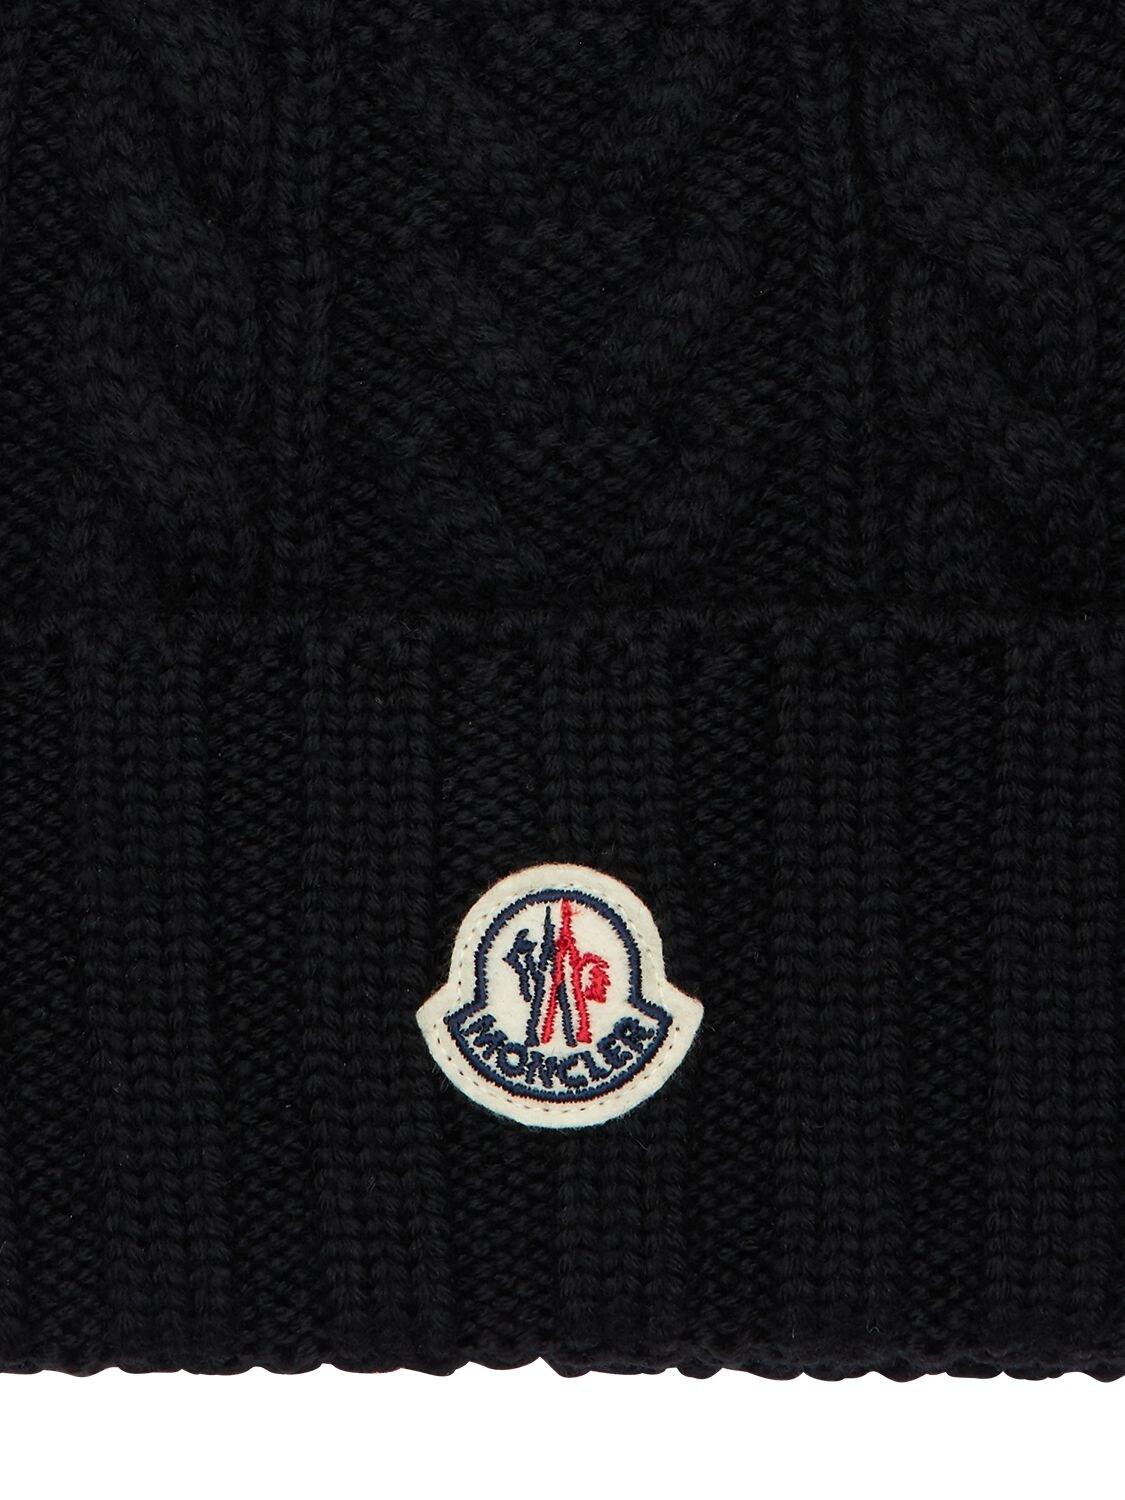 Moncler Wool Knit Beanie Hat in Black - Lyst